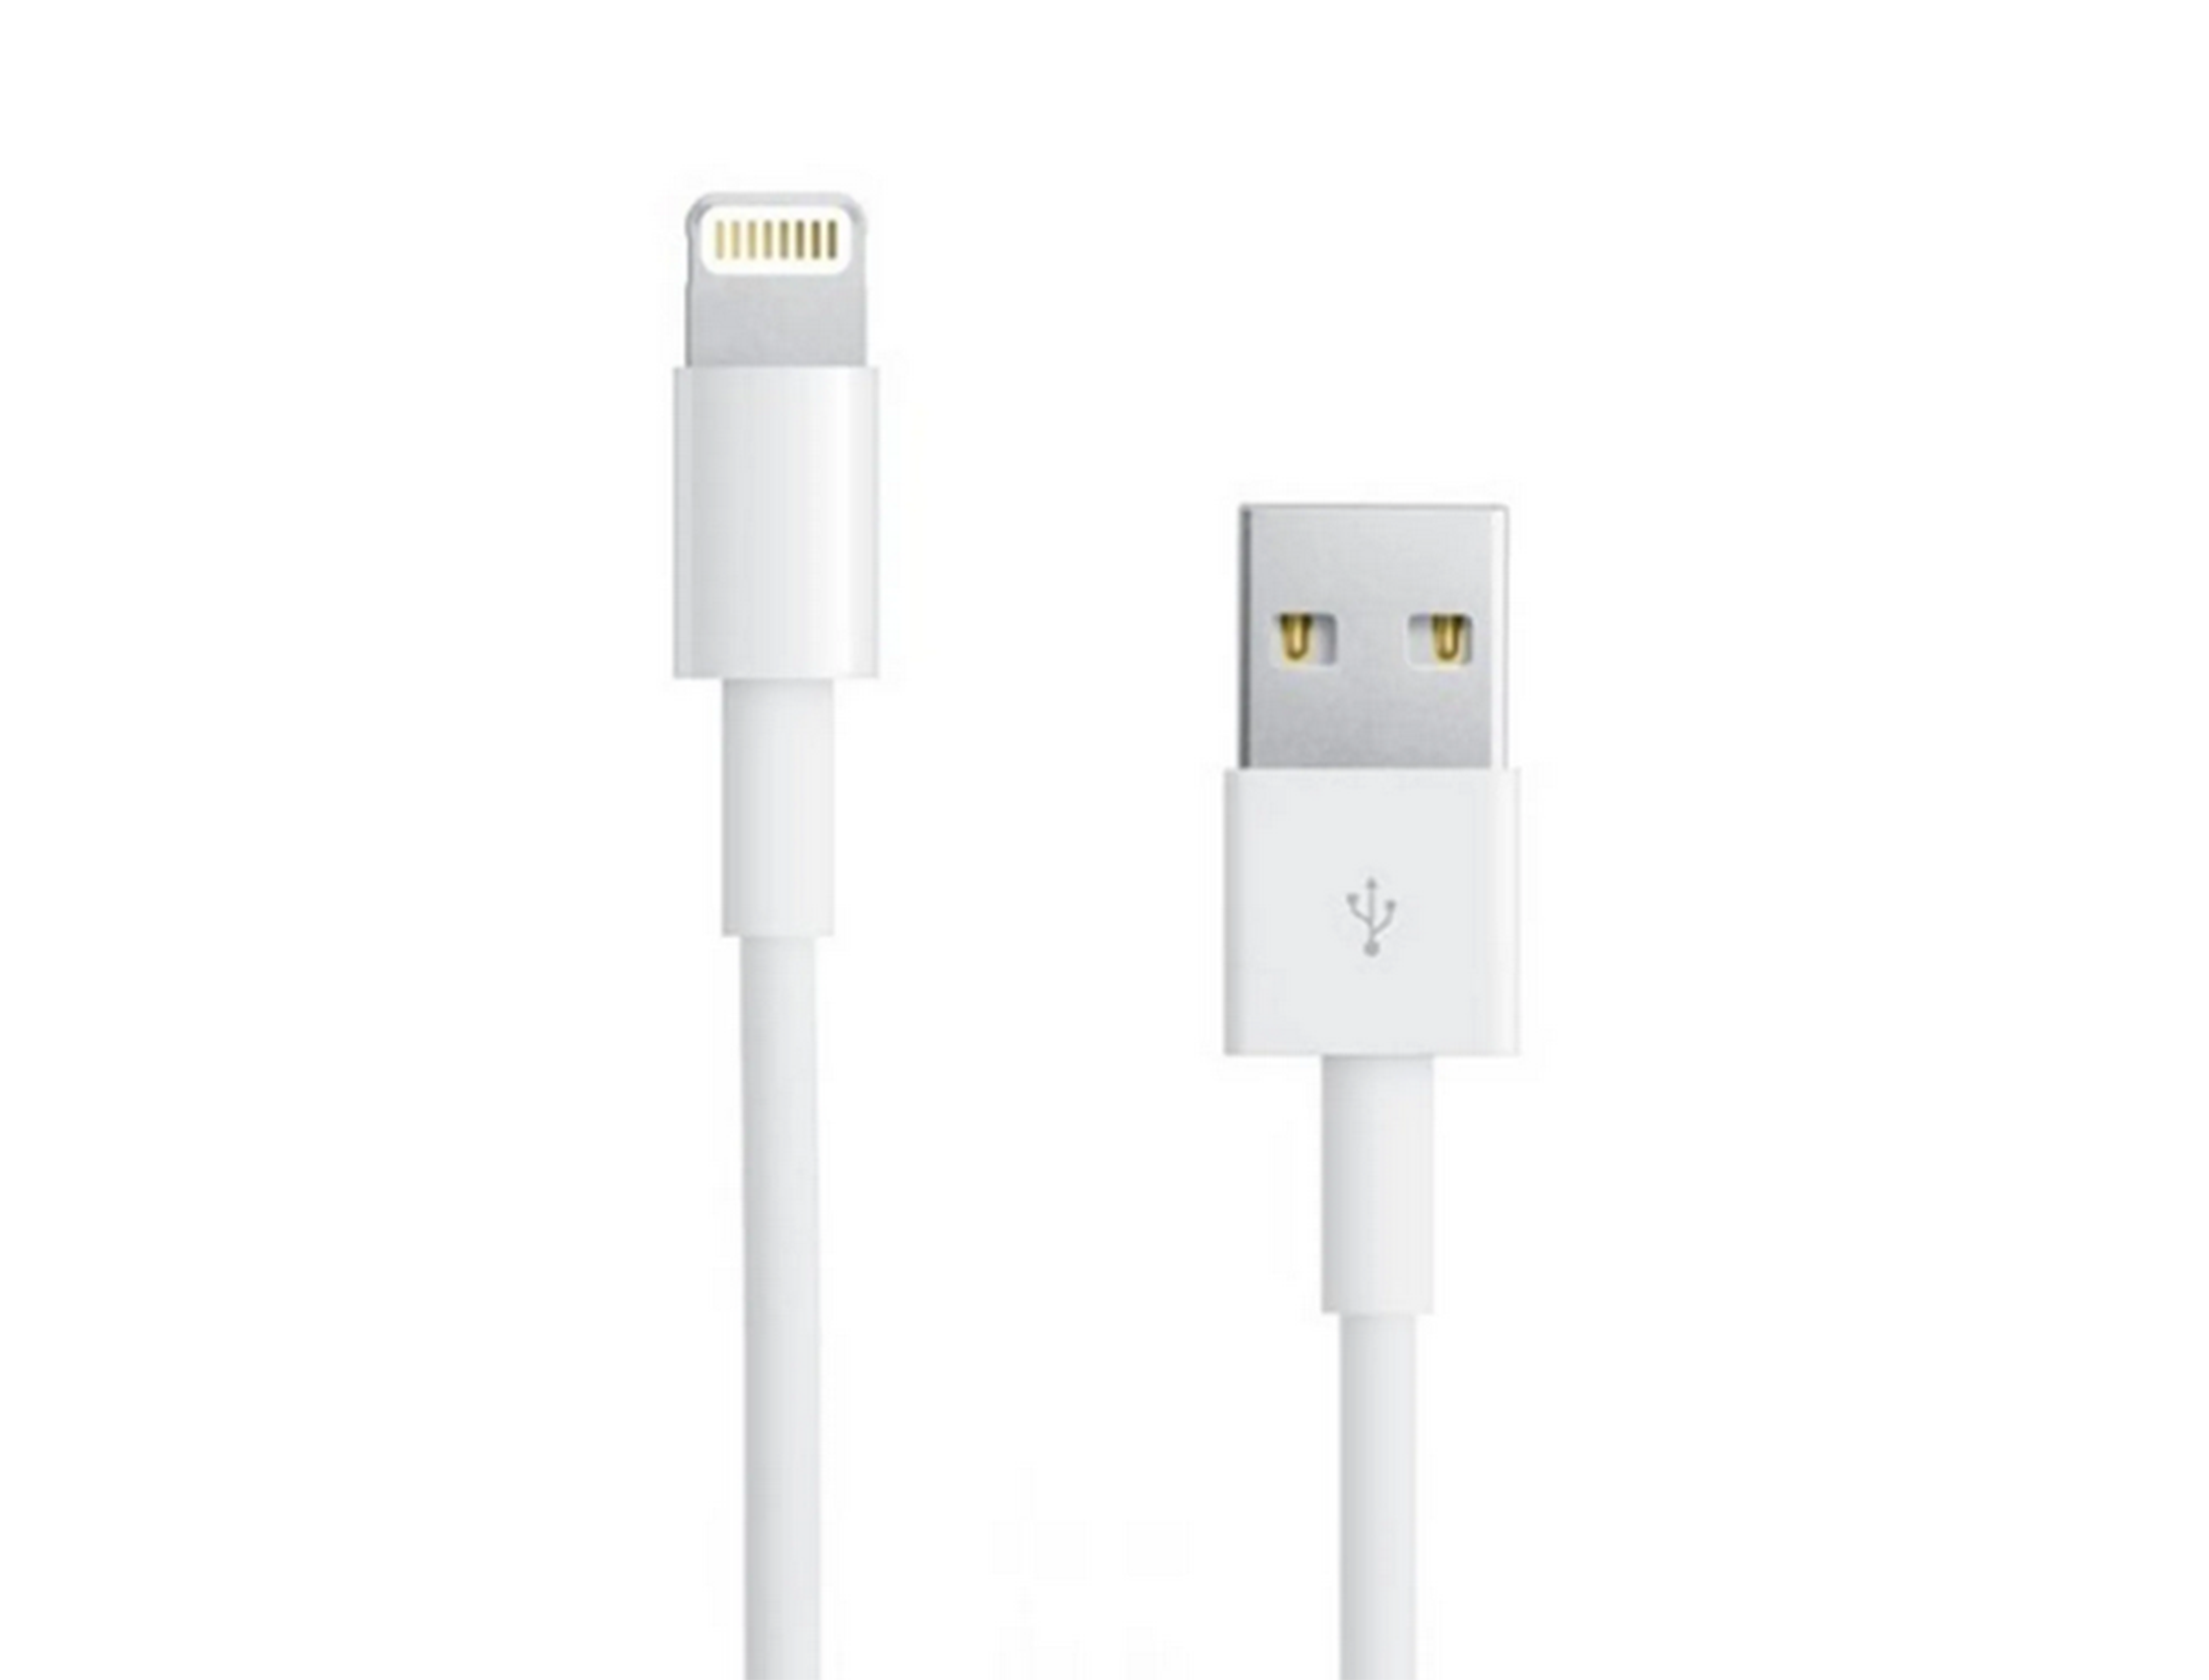 10x iPhone 6 Plus Lightning auf USB Kabel 2m Ladekabel